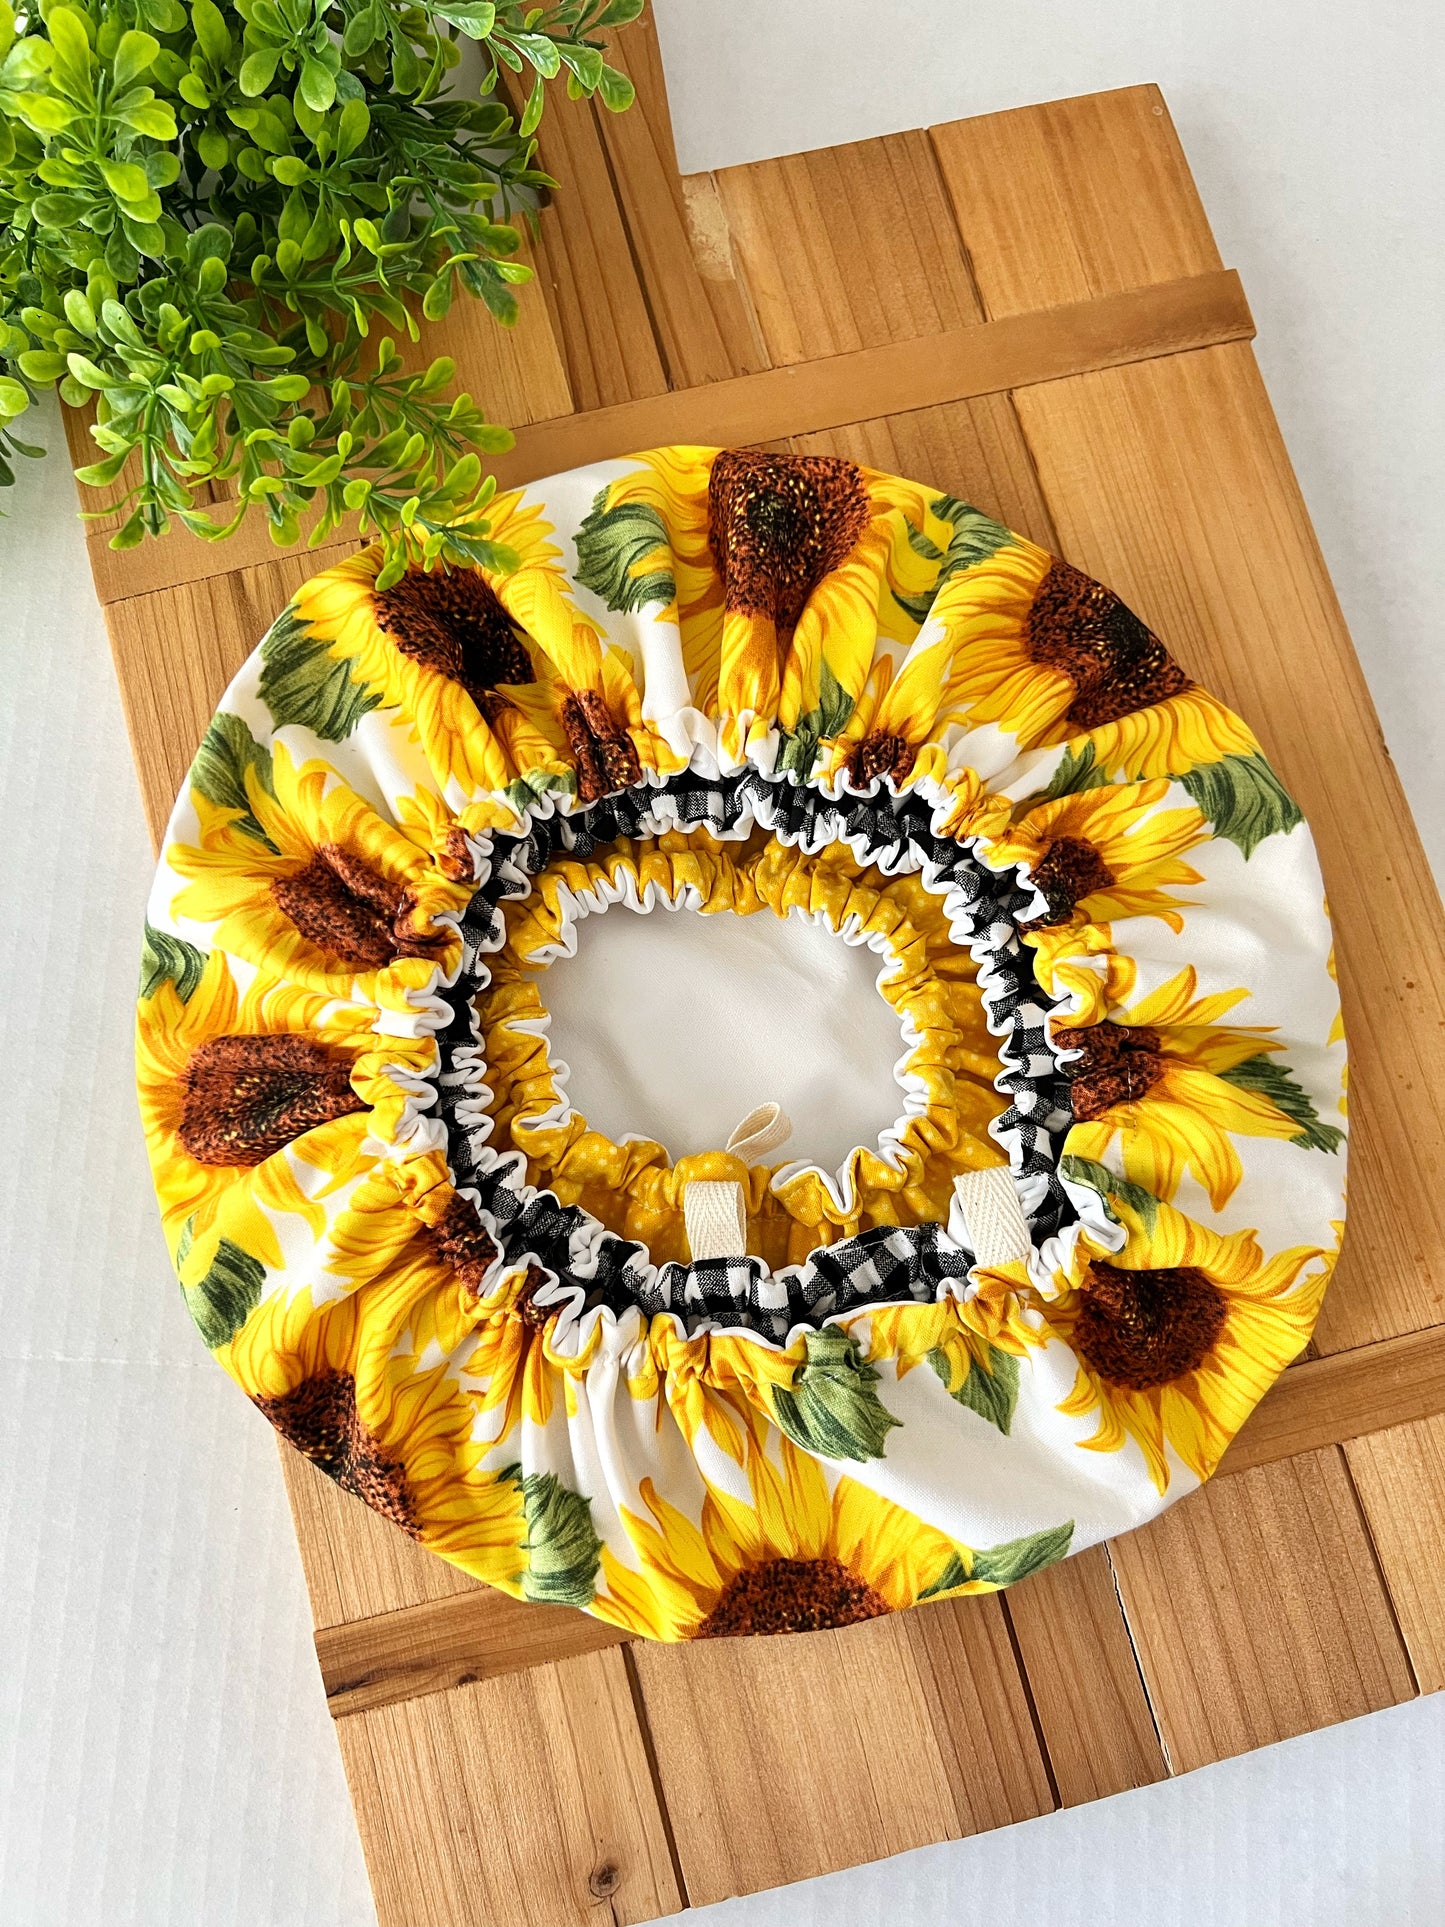 Large Sunflower Bowl Cover Set